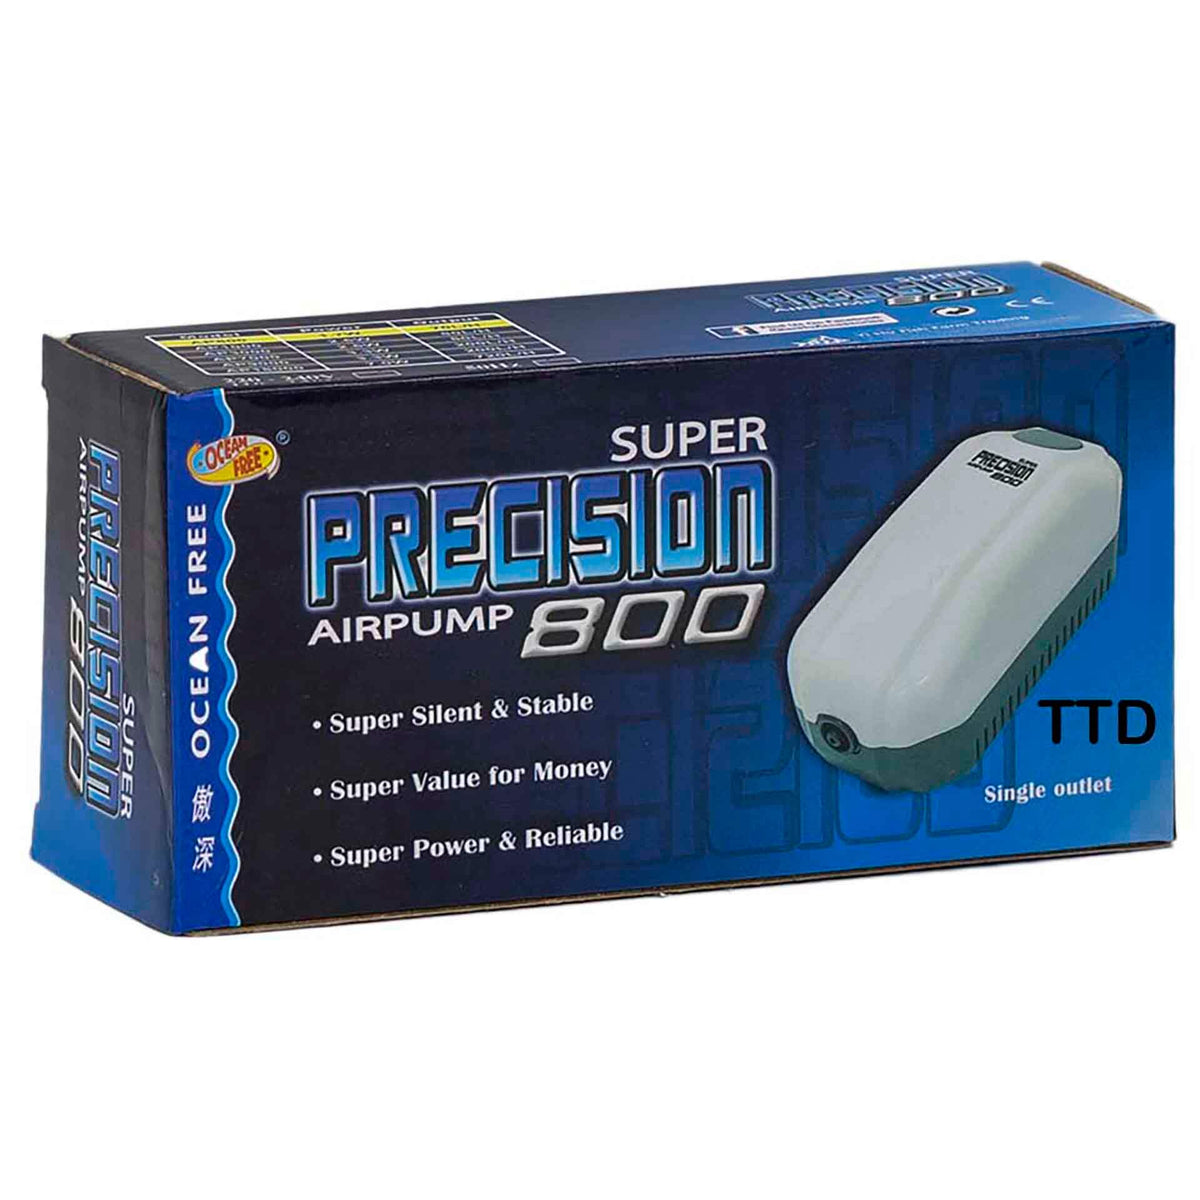 Ocean Free Super Precision Air Pump - 800 Single outlet